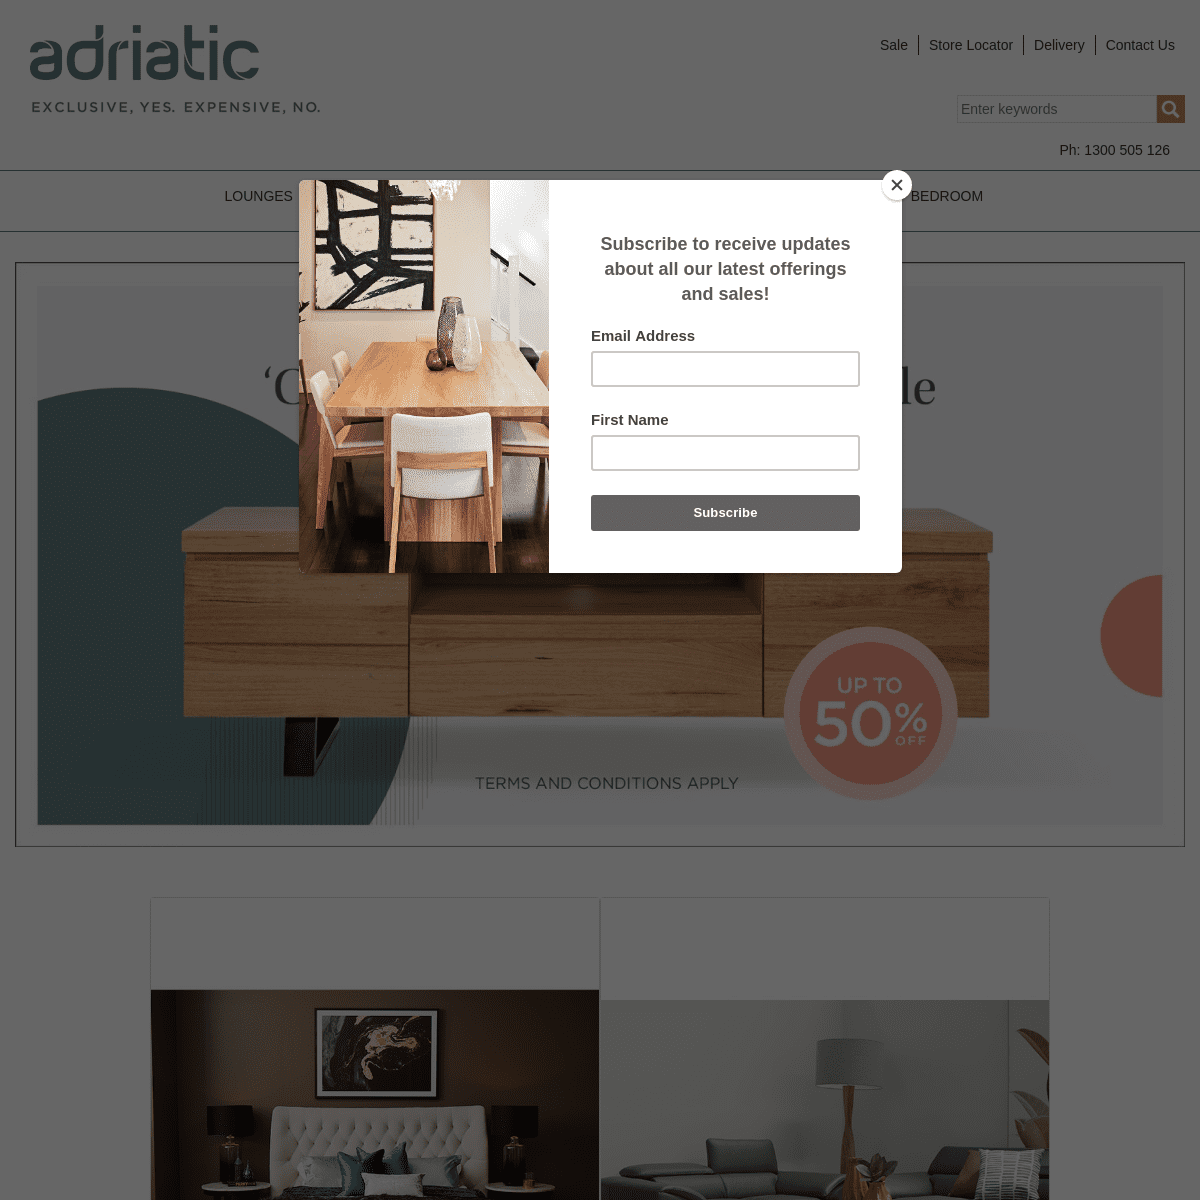 A complete backup of adriatic.com.au